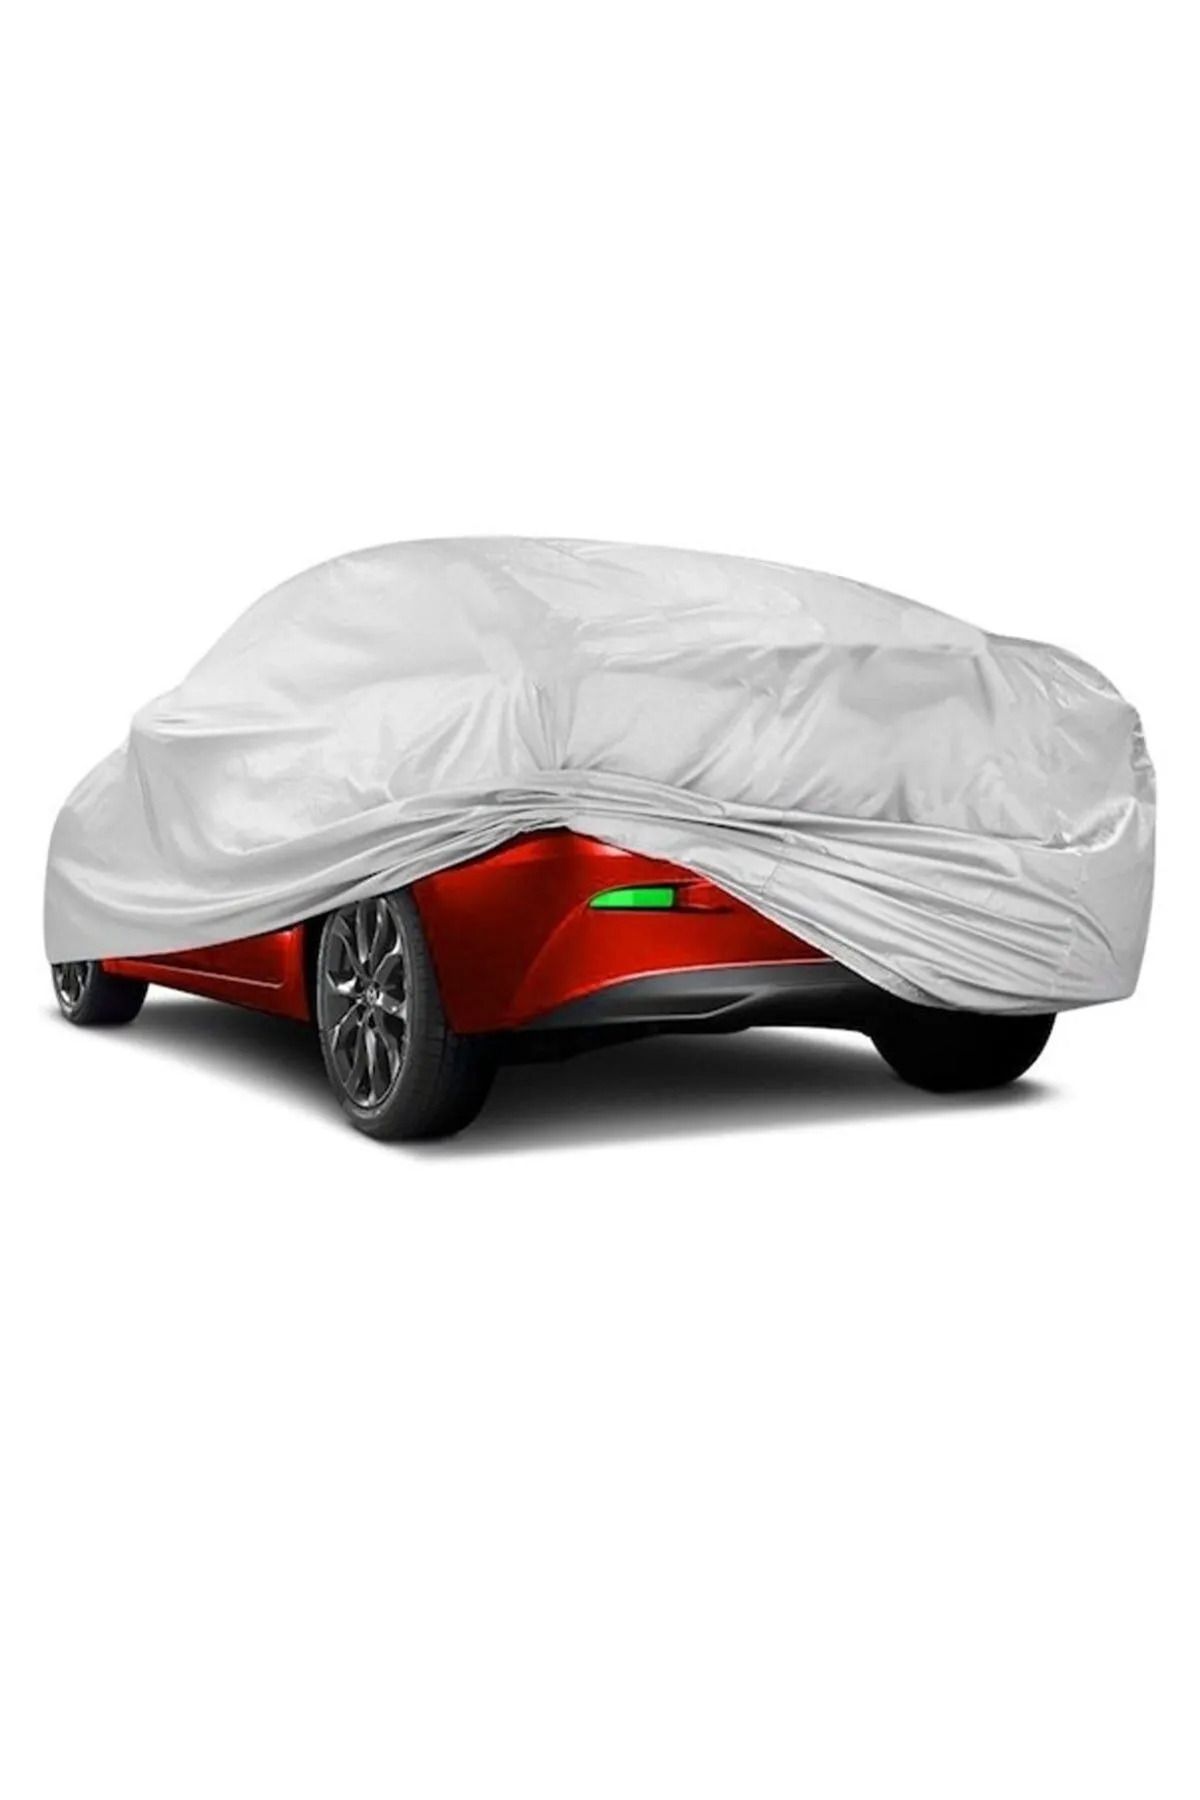 PlusOto Peugeot 208 Compatible Car Tarpaulin, Vehicle Cover, Tent